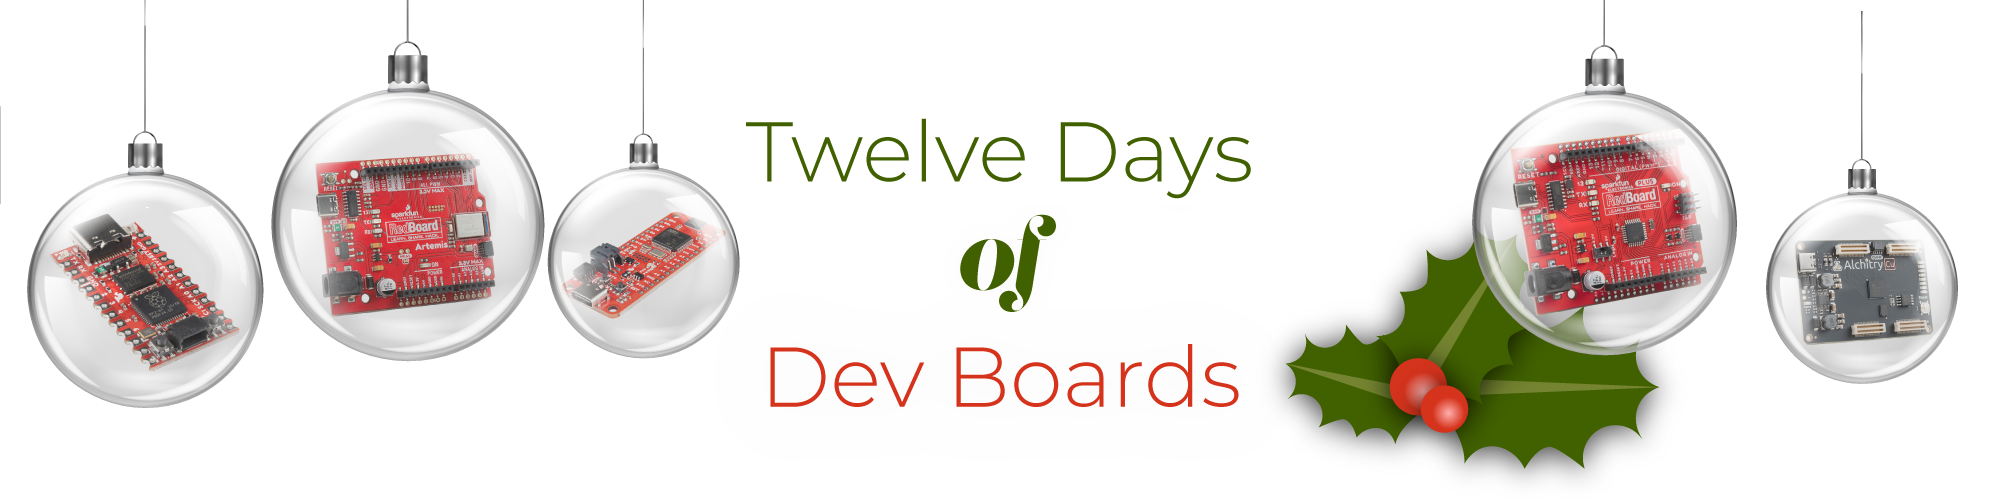 12 Days of Dev Boards Sale